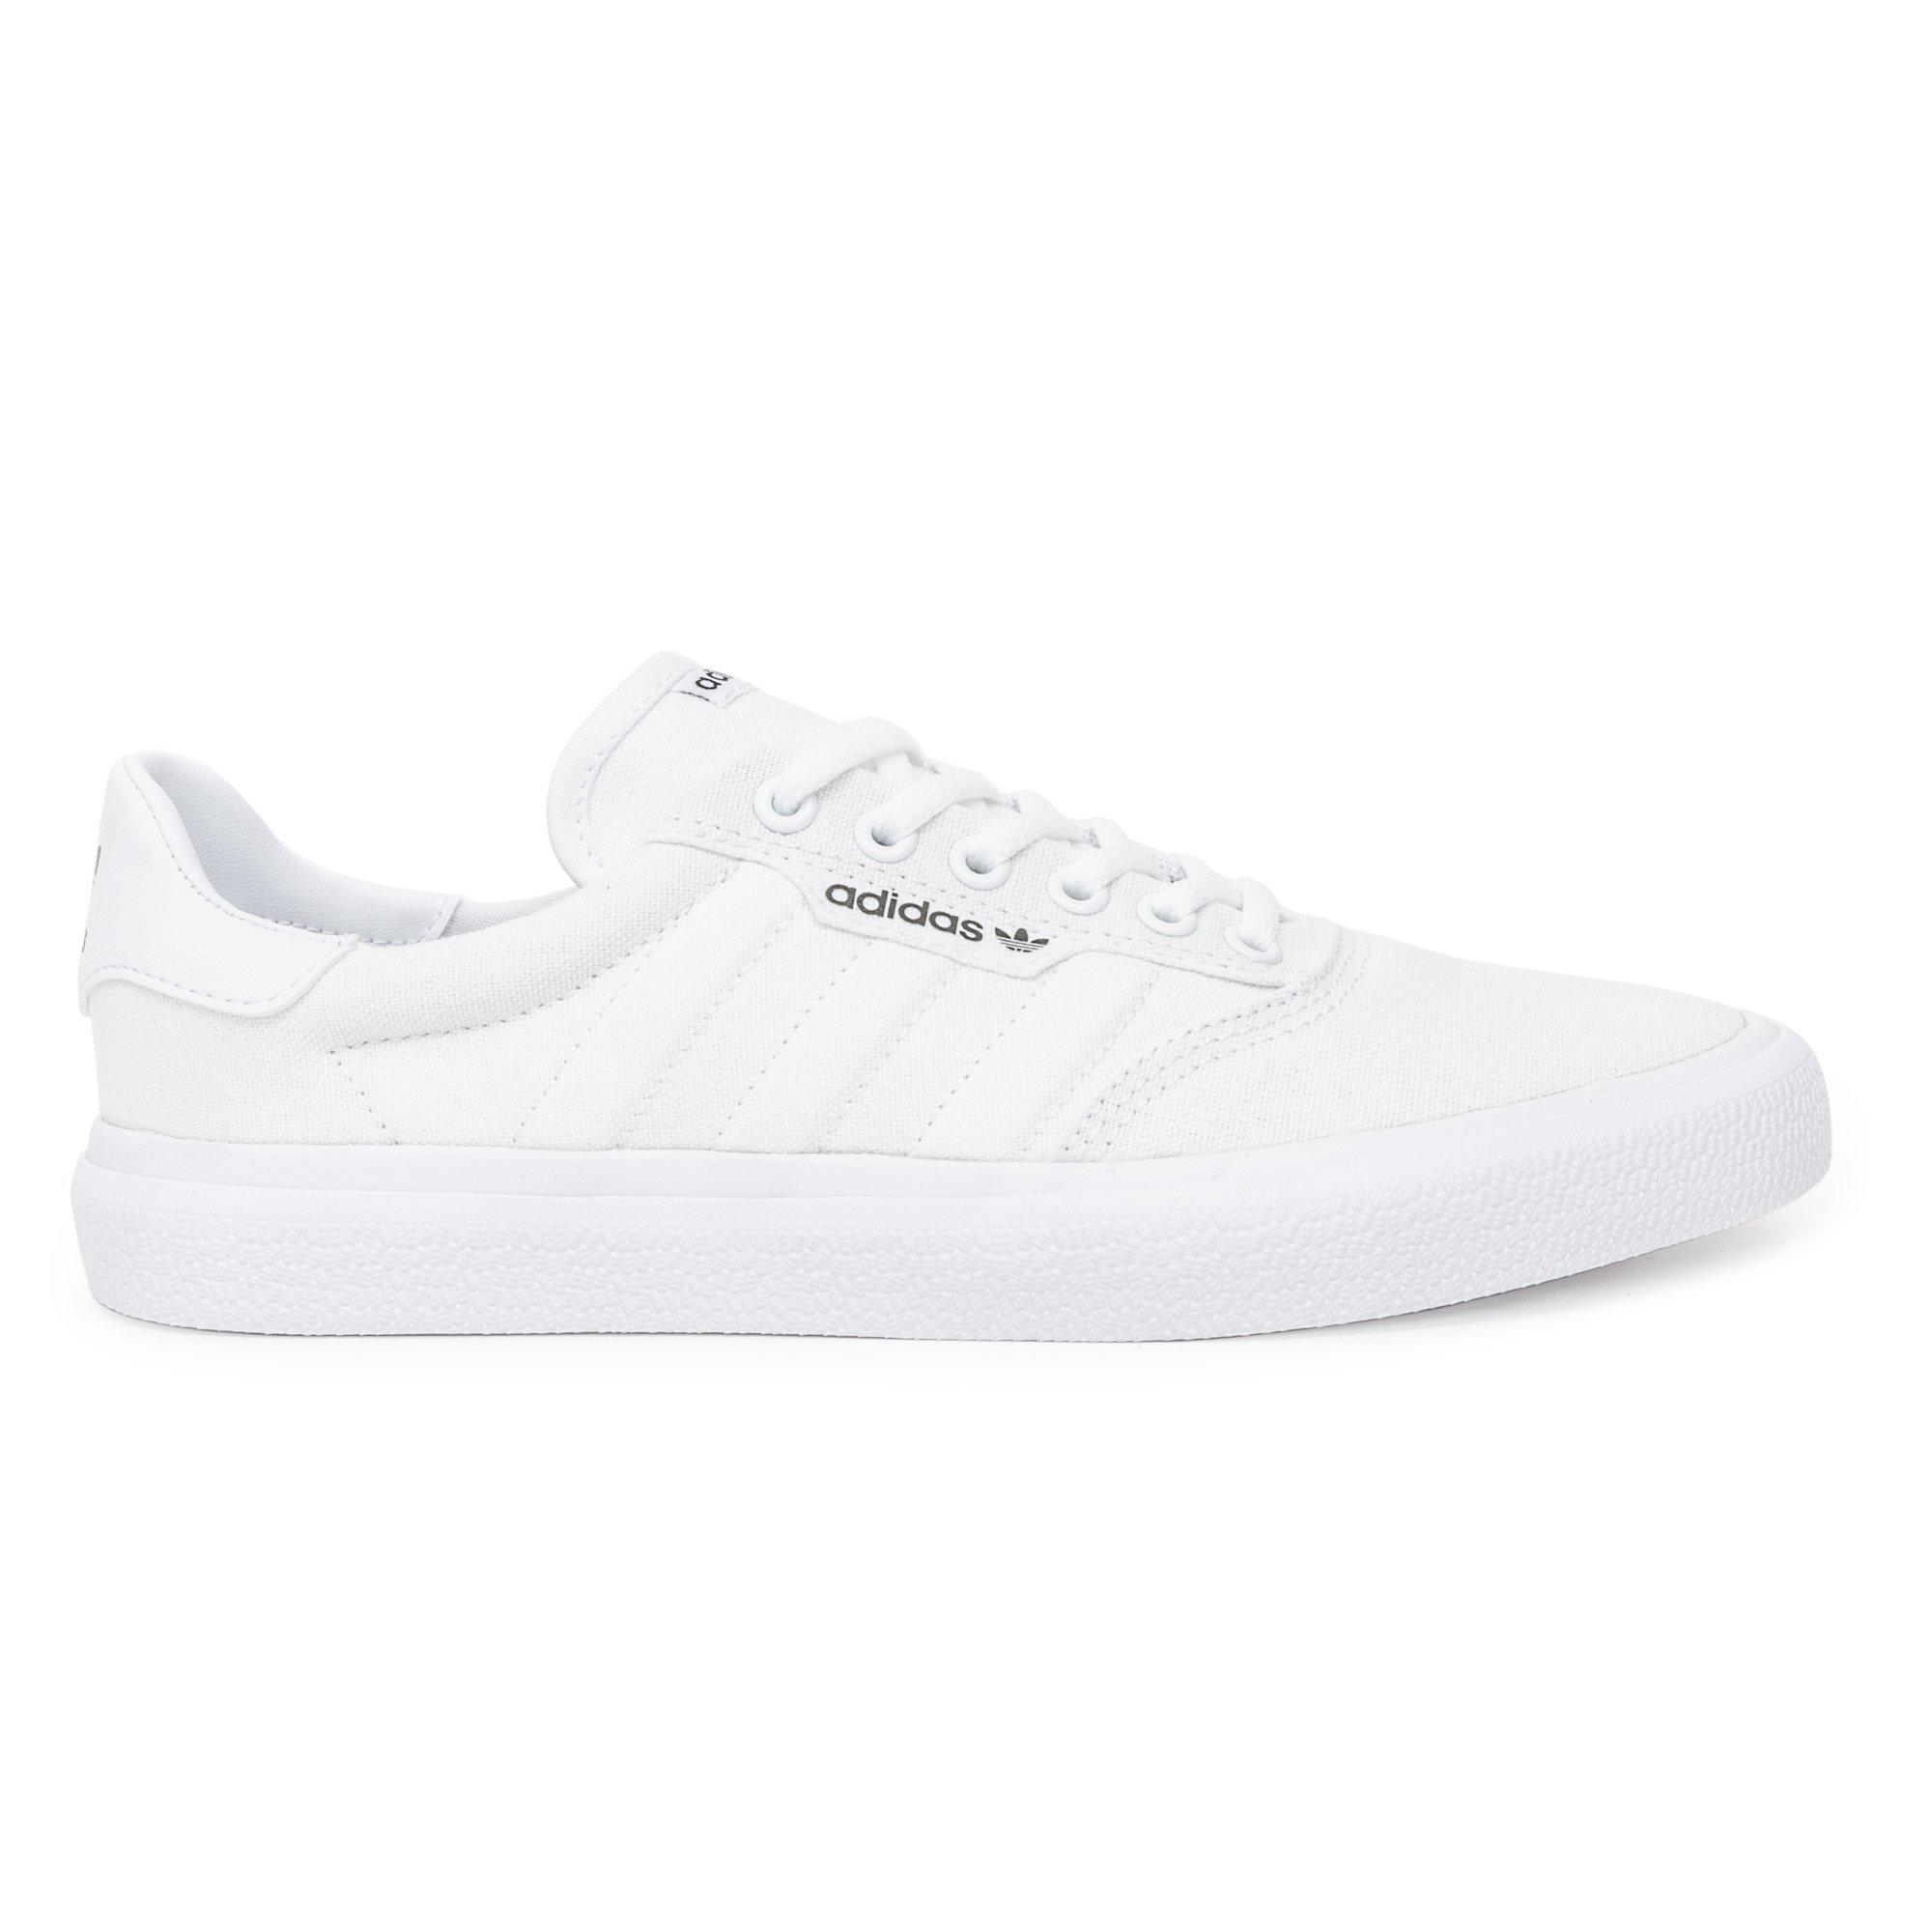 adidas Canvas 3mc Vulc Shoes in White 